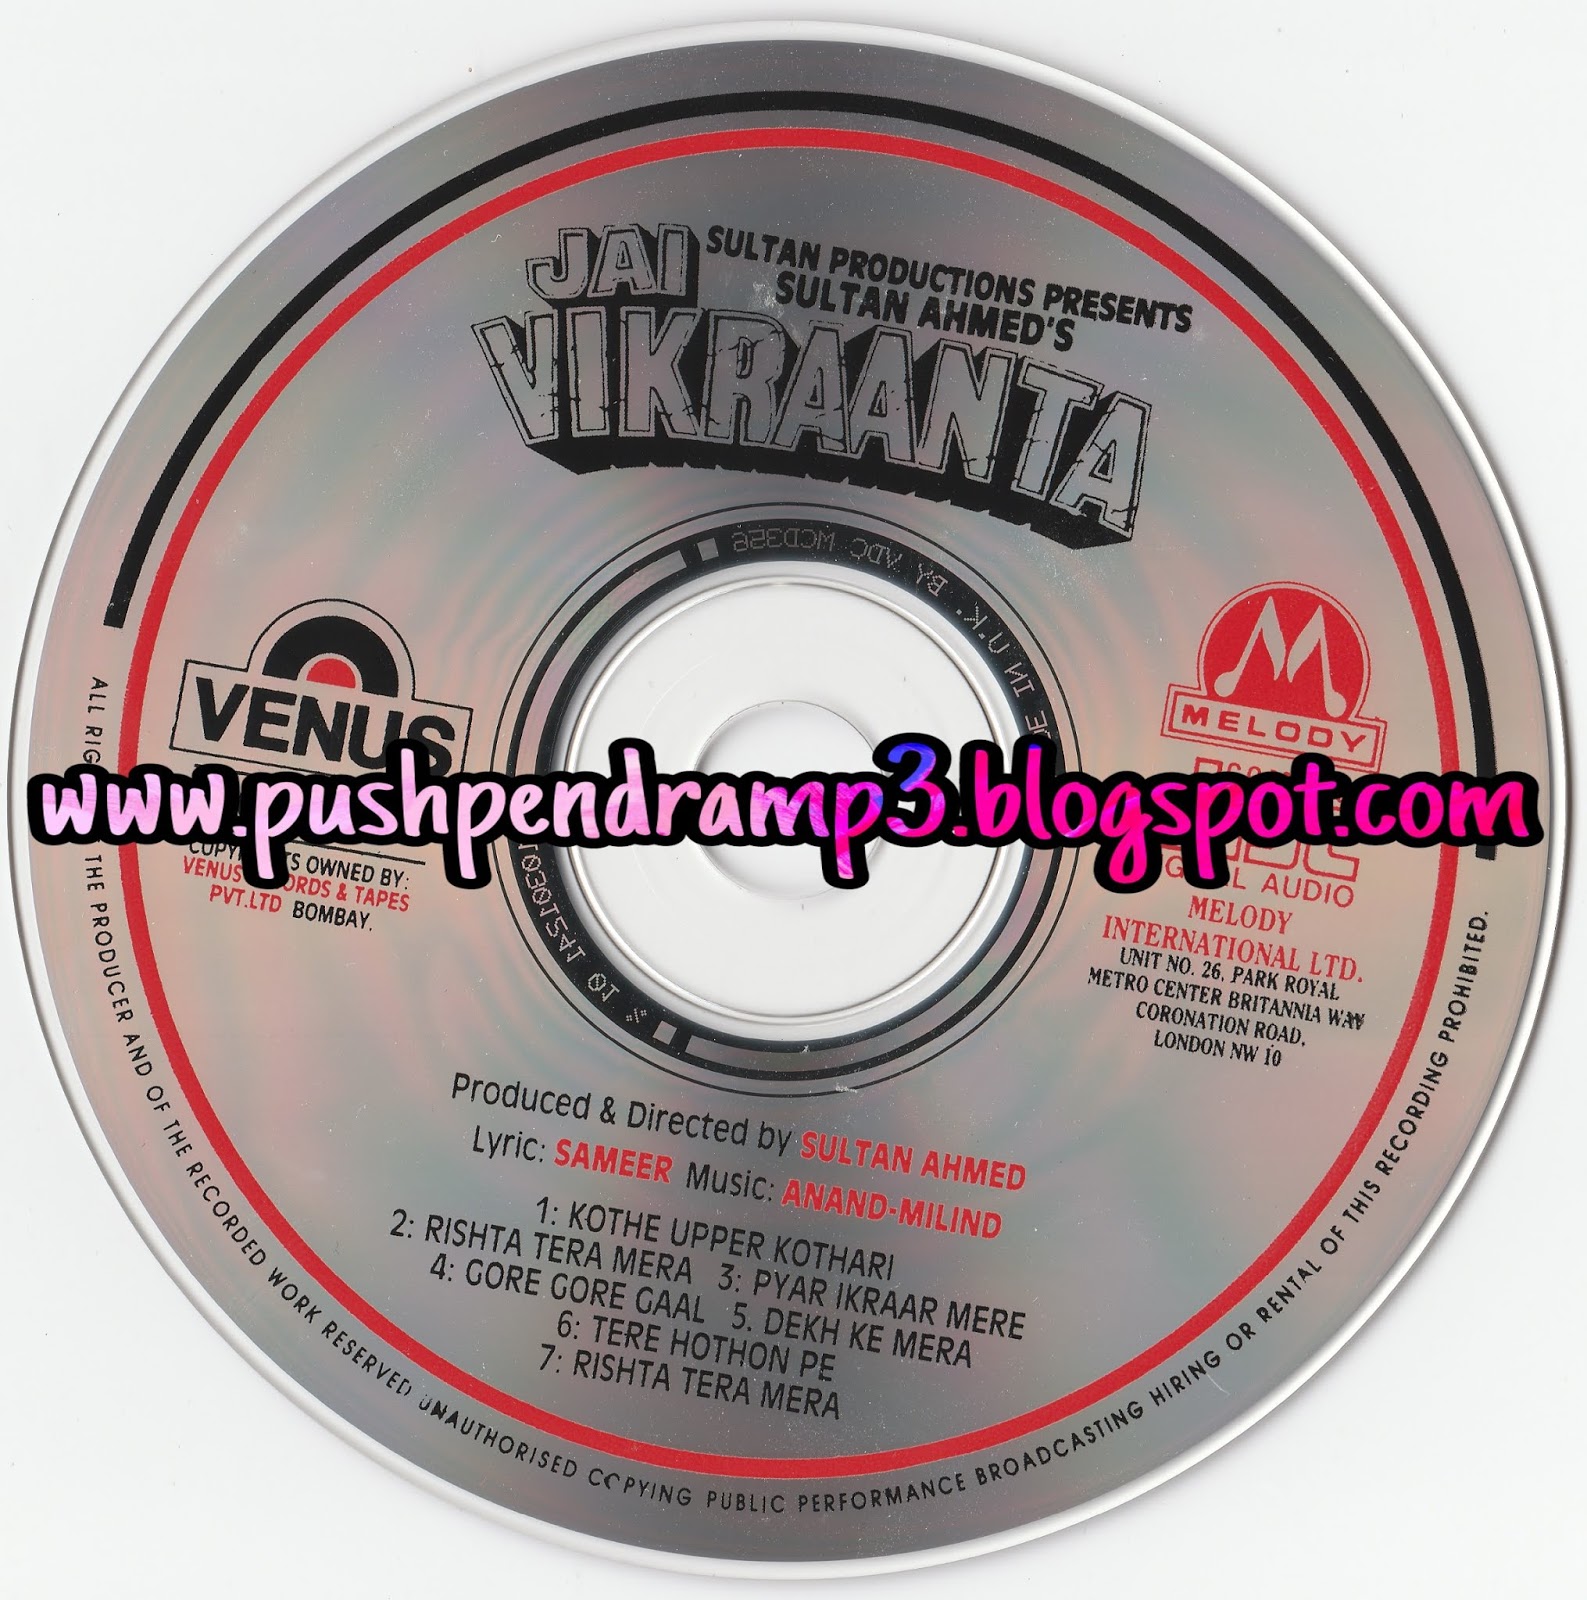 Pushpendramp3 Blogspot Com Movie Jai Vikraanta 1994 Mp3 320kbps Vbr Jai vikraanta top song is kothe upper kothari. jai vikraanta 1994